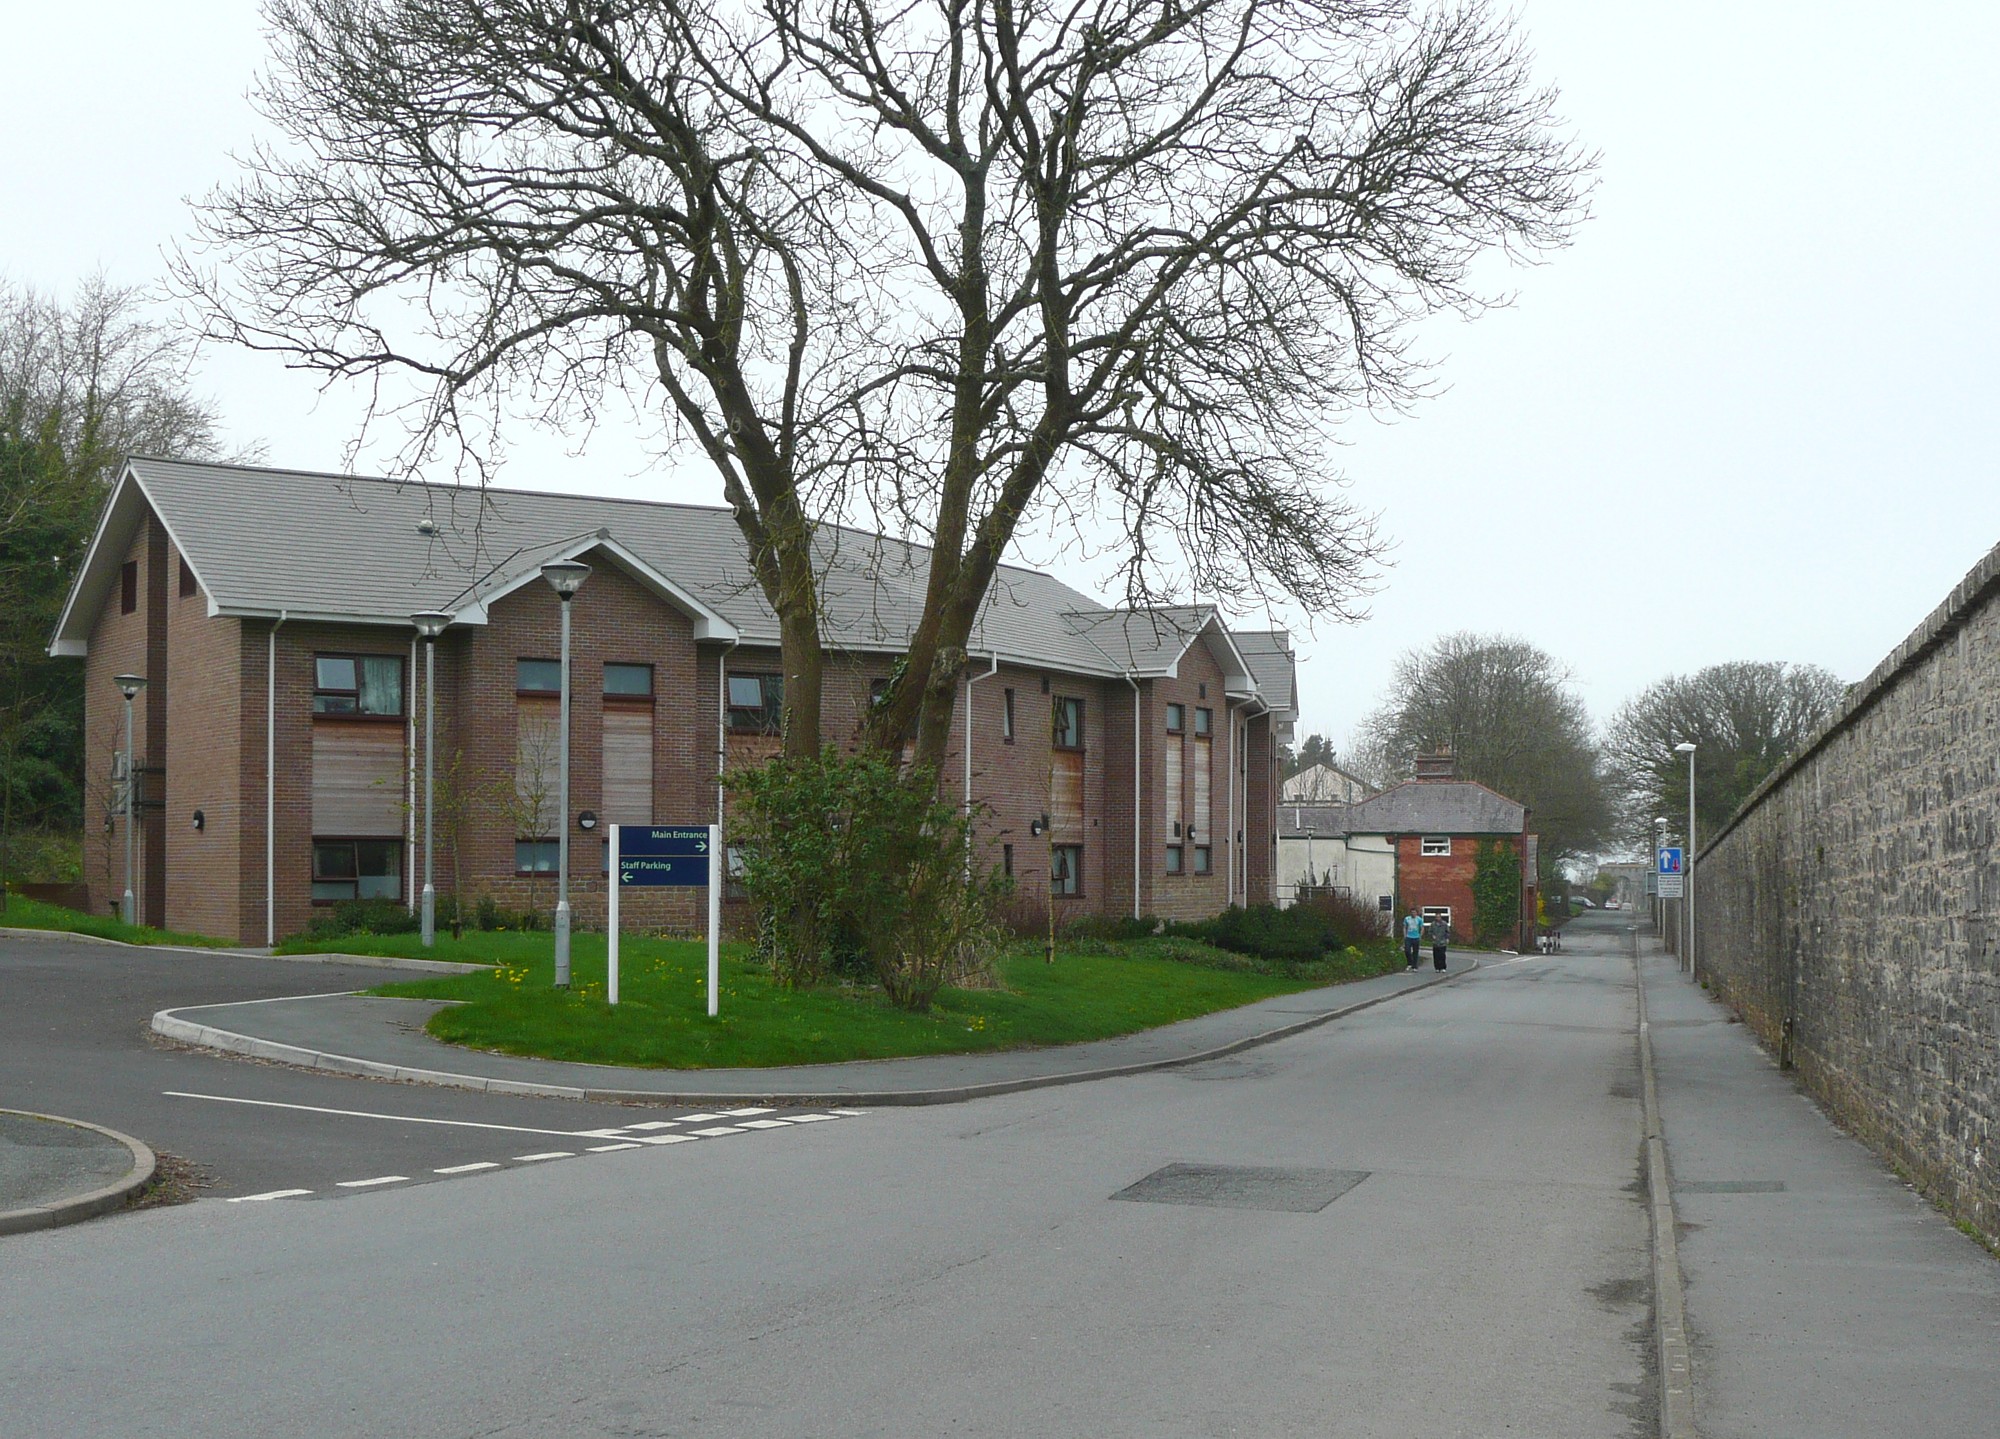 South Pembrokeshire Hospital